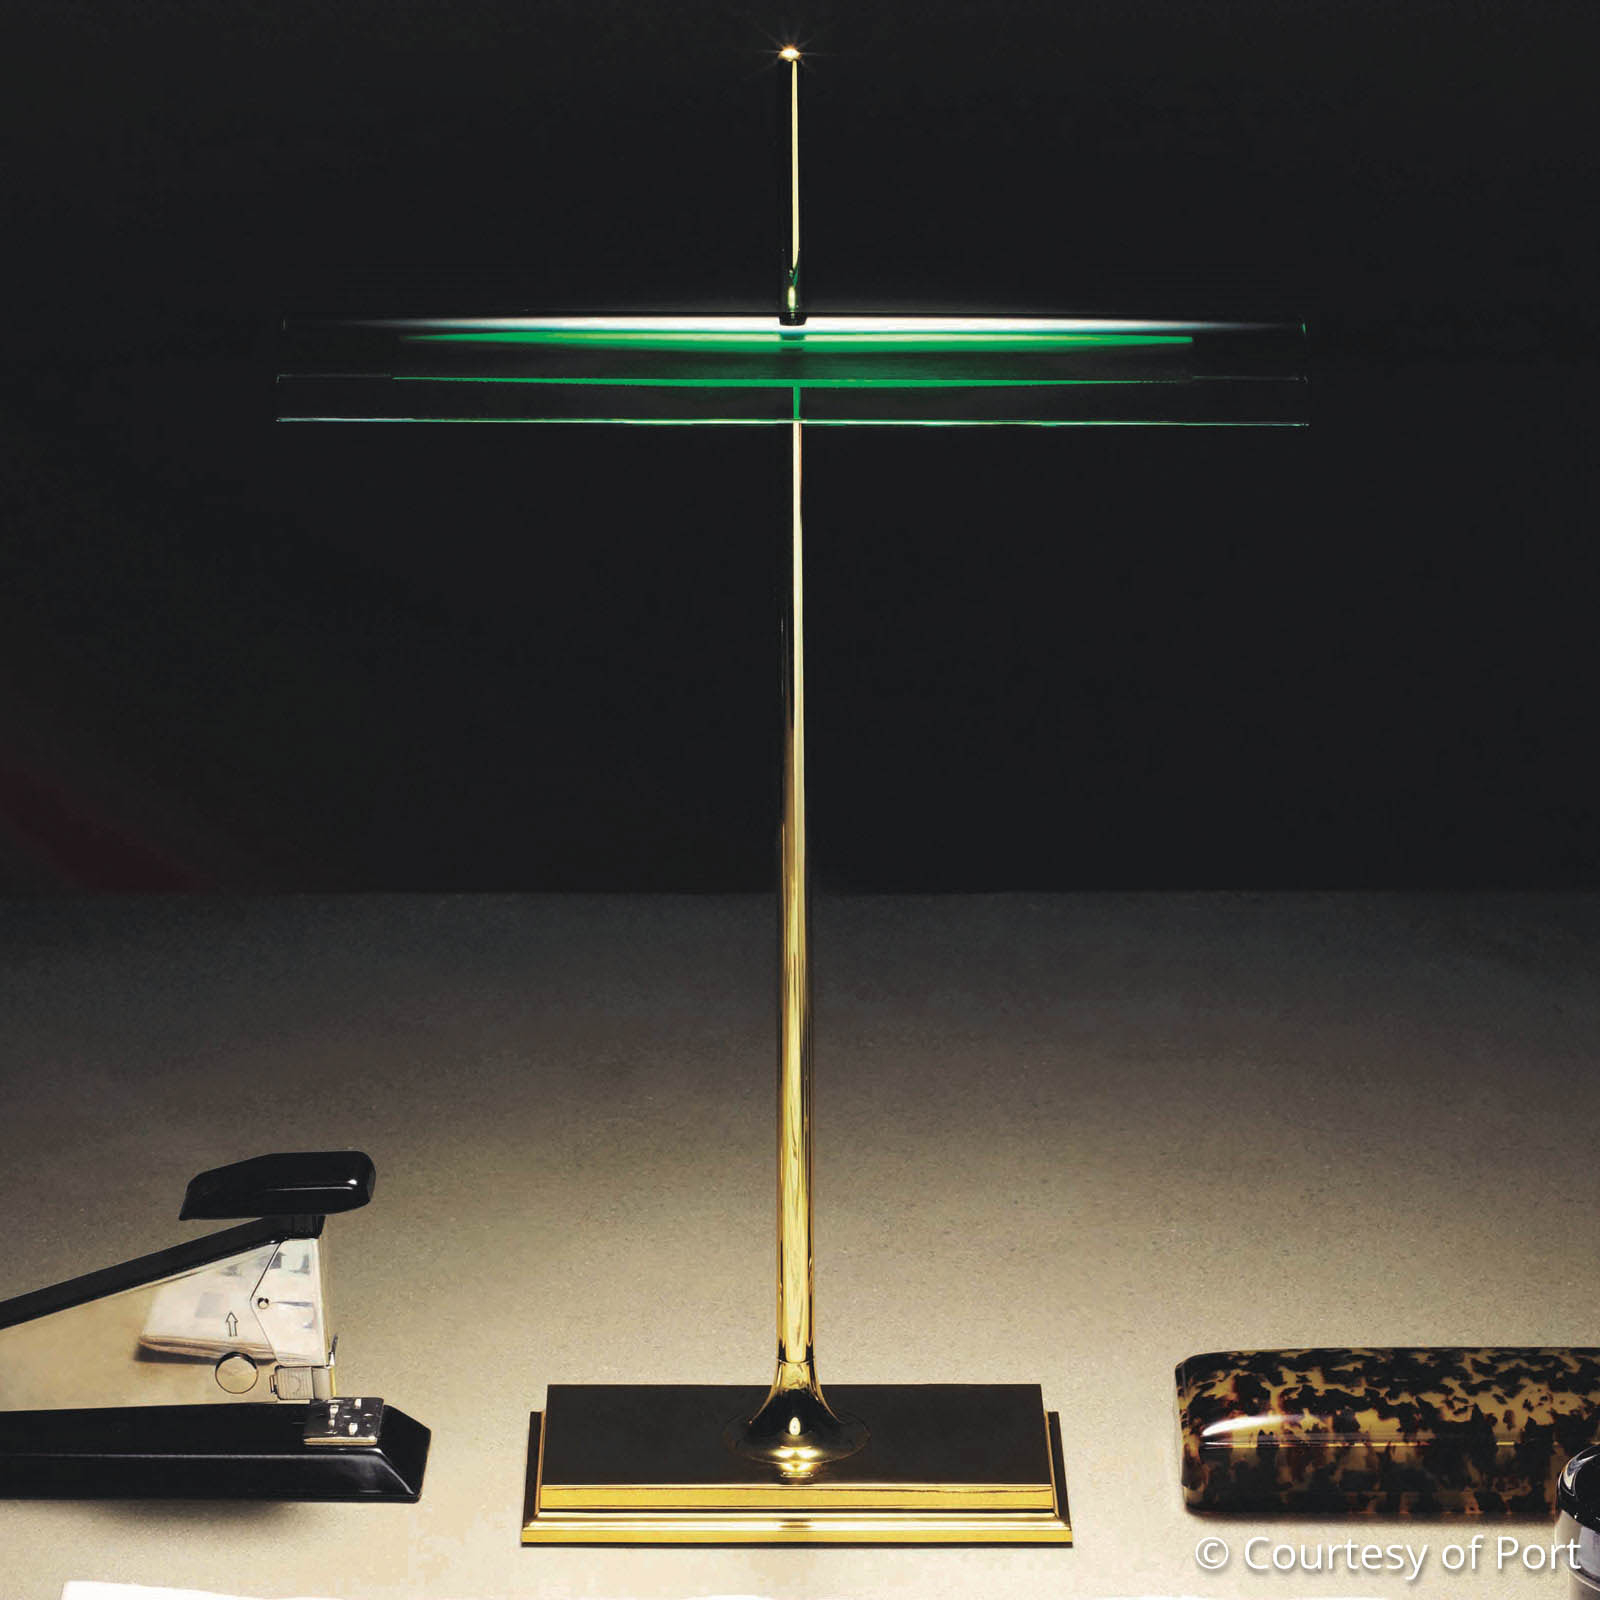 FLOS Goldman - tafellamp met USB, groen